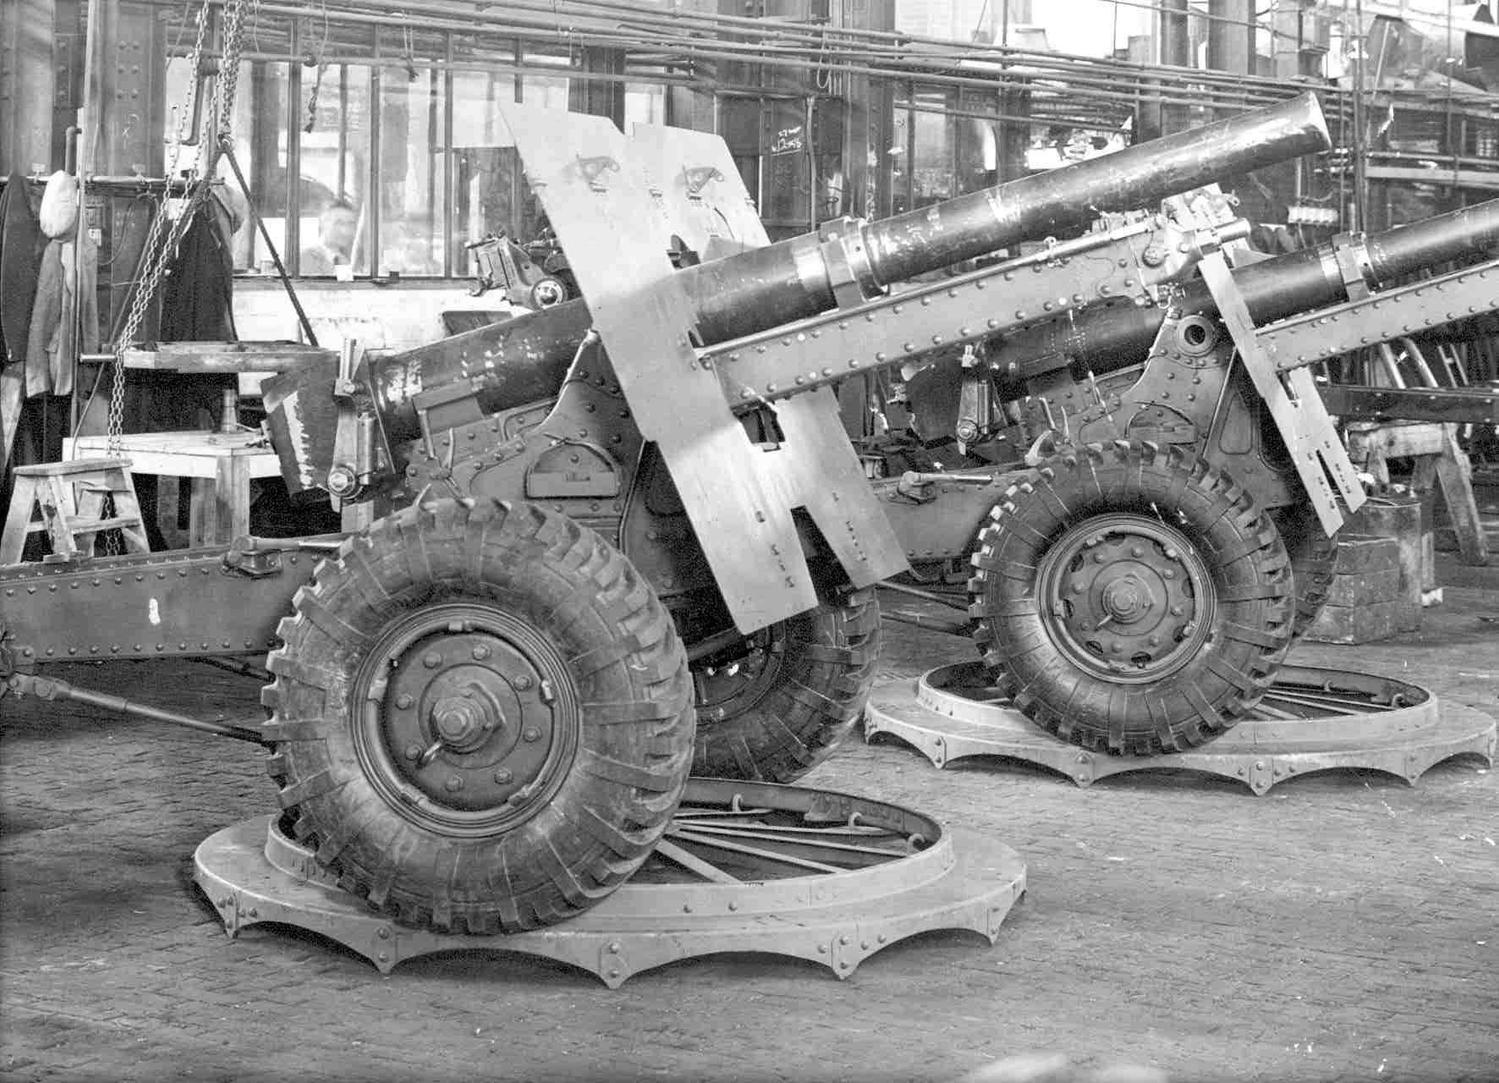 Assembling 25 Pounder Field Artillery pieces, at the Baker Perkins factory during the Second World War.